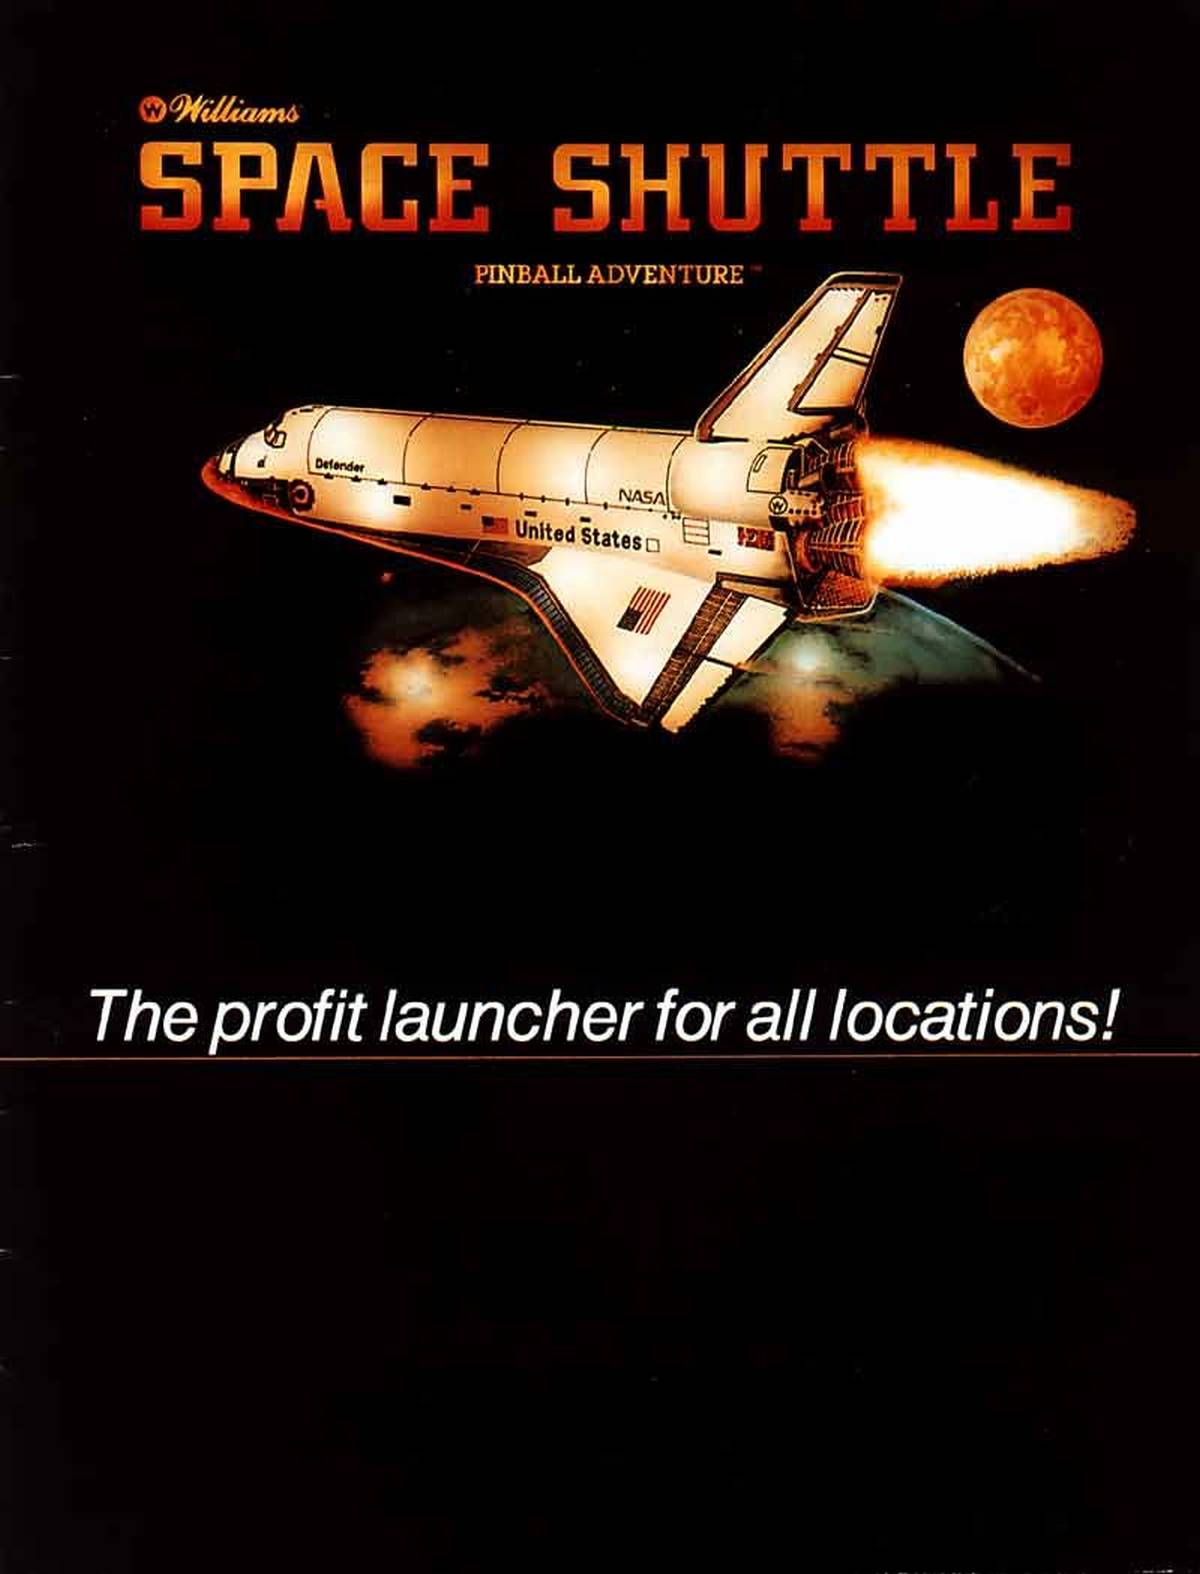 spaceshuttle17.jpg